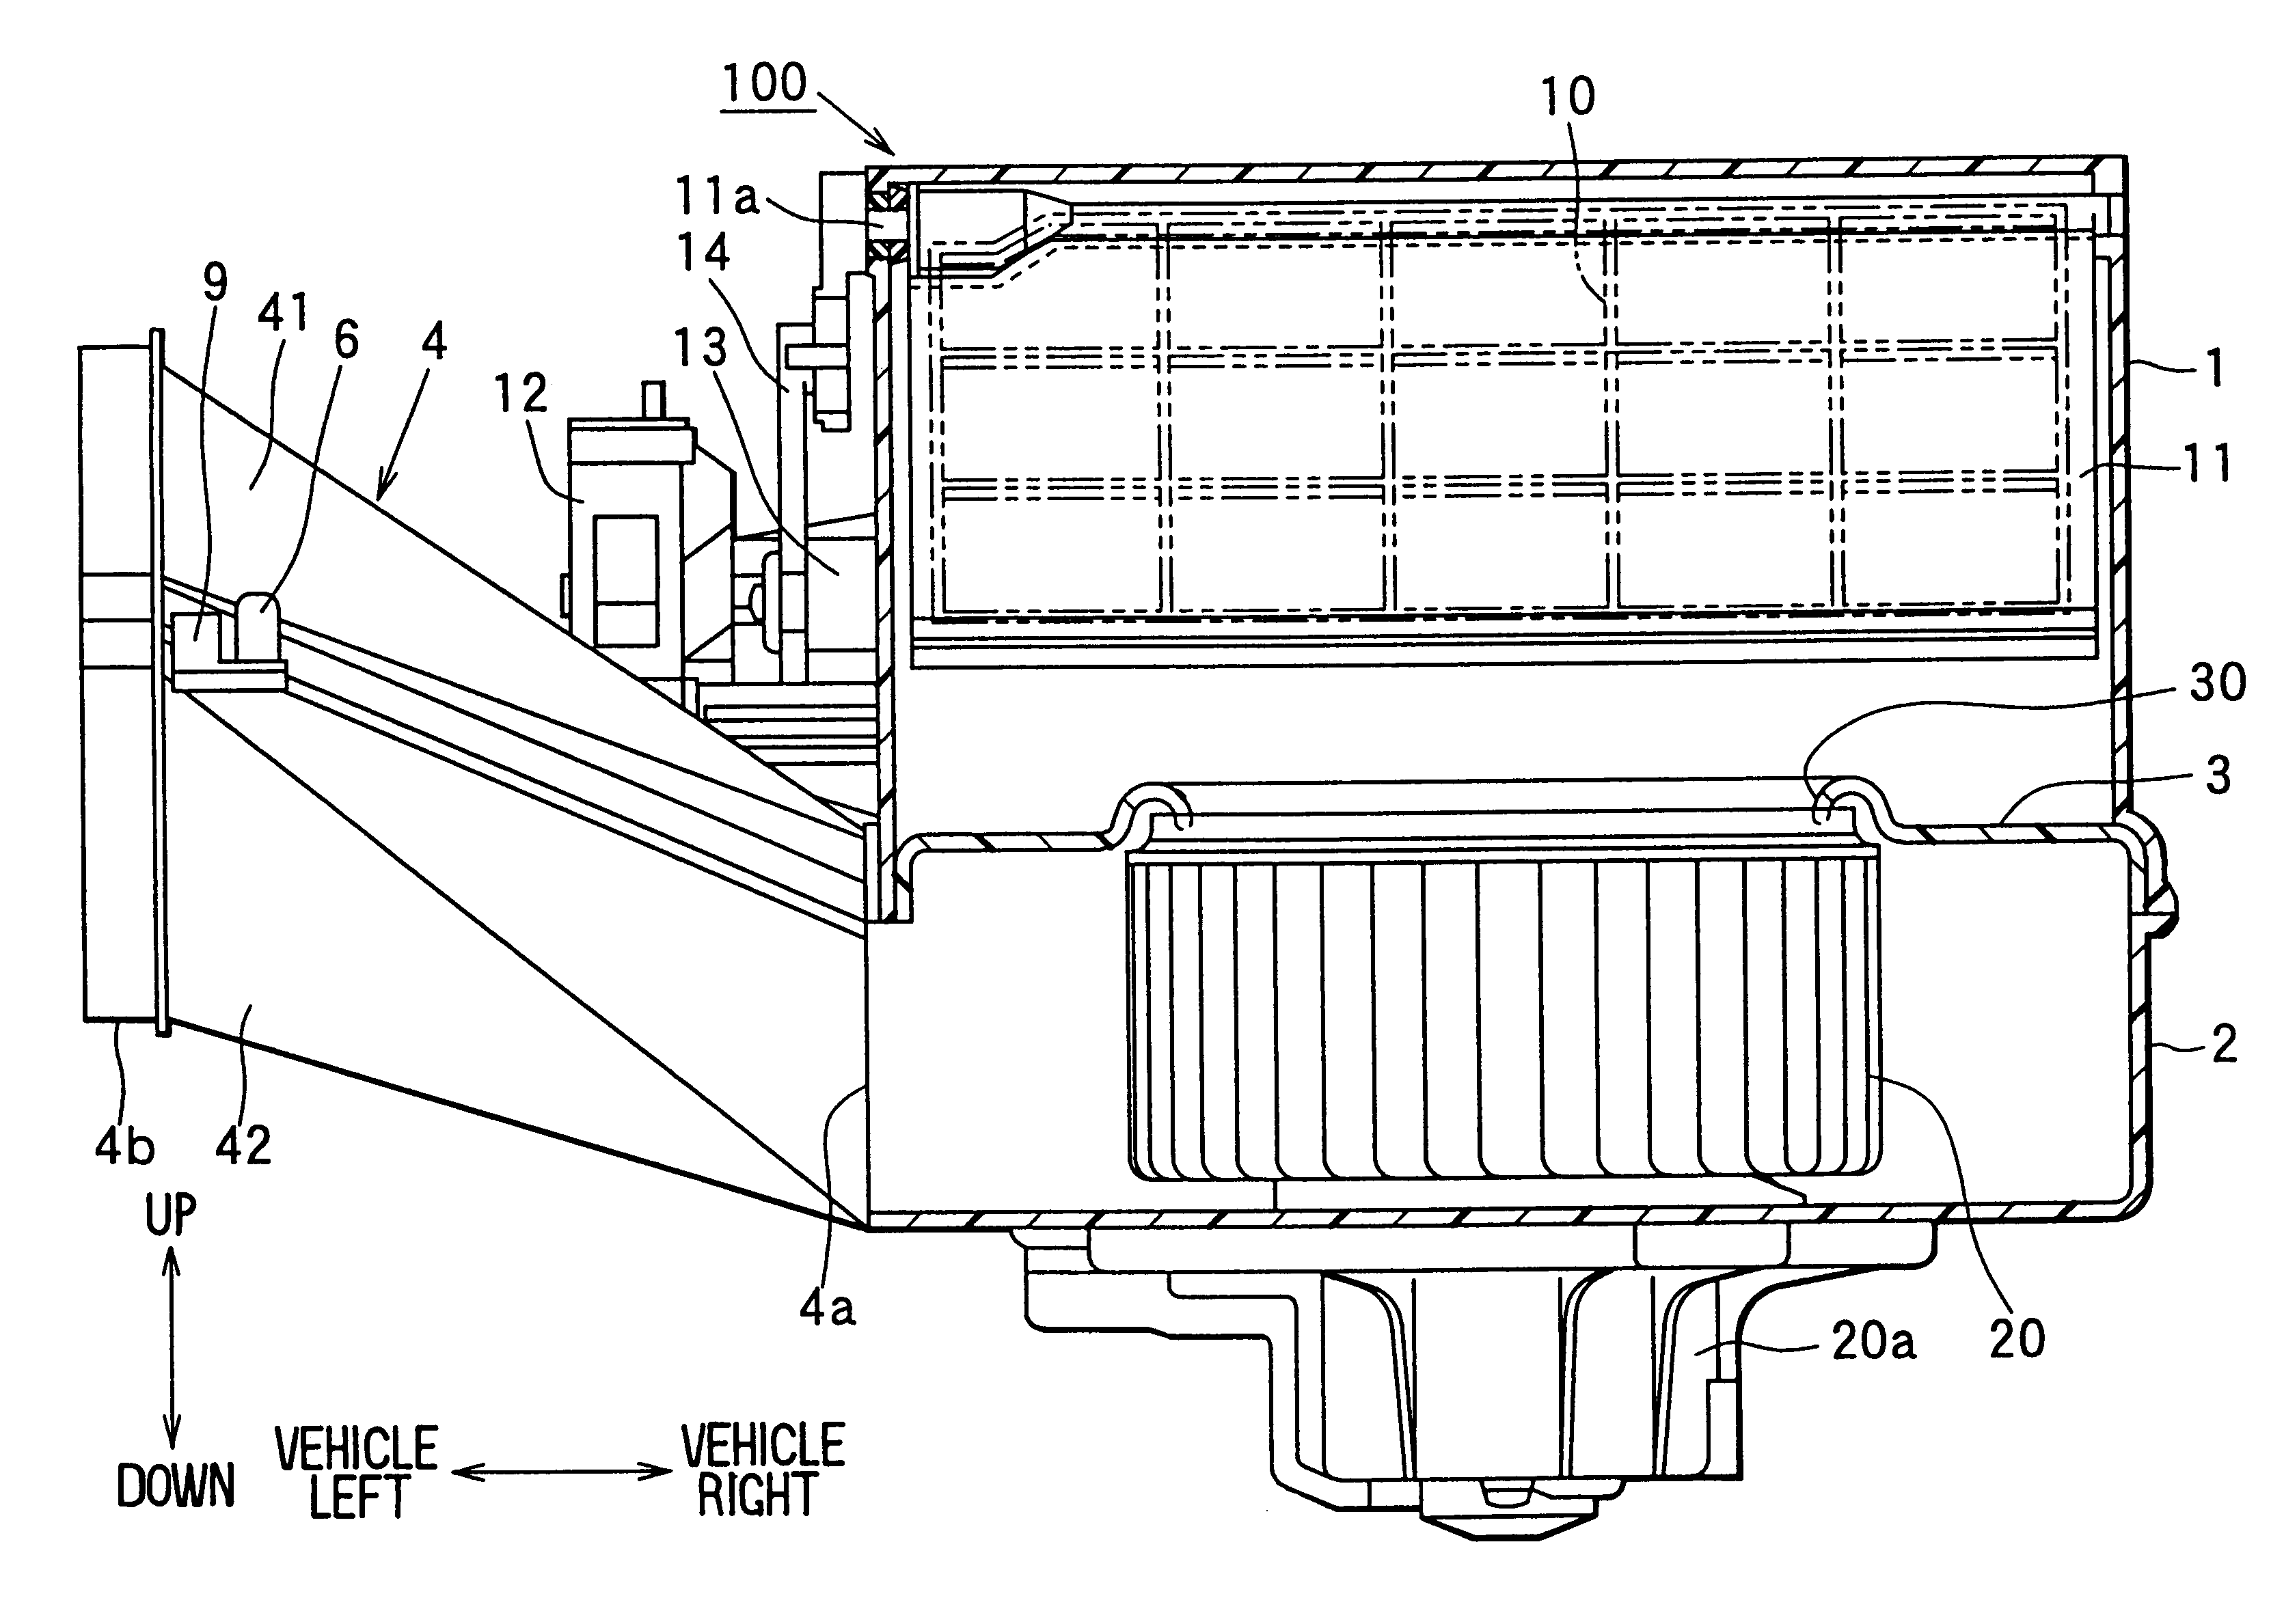 Case assembling structure of blower unit